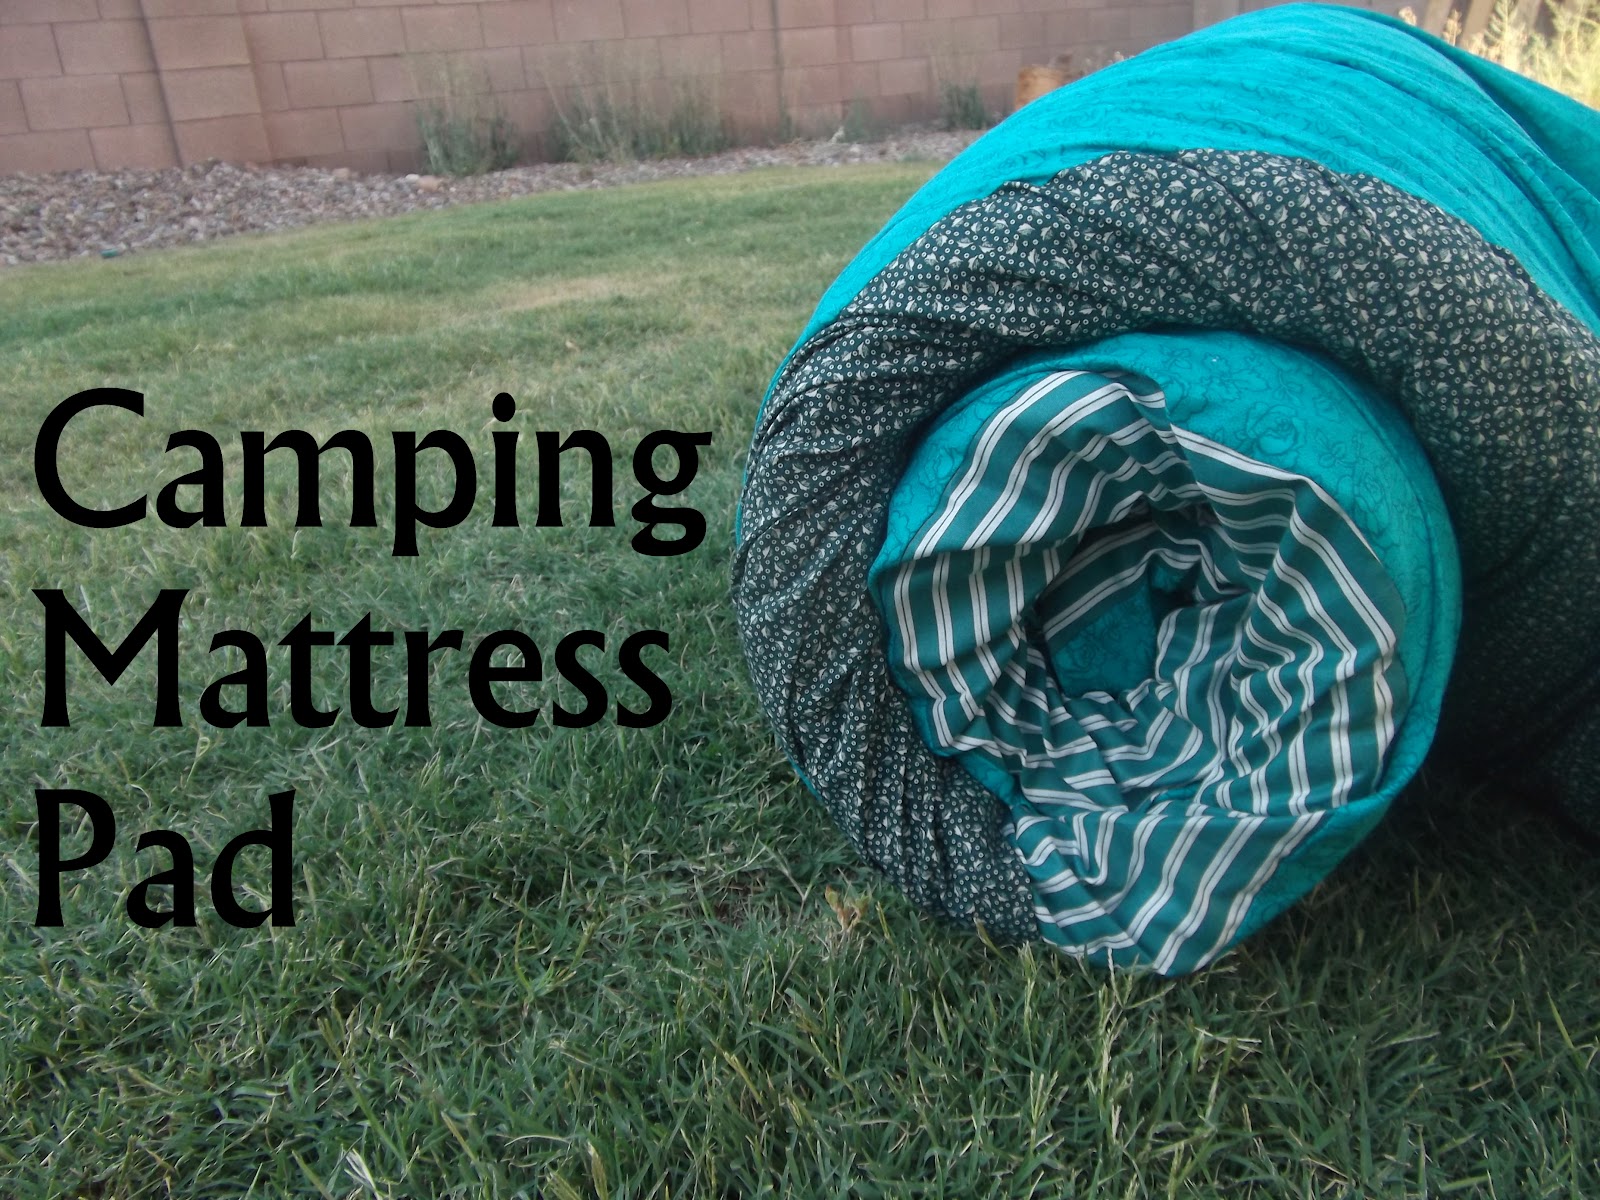 camping foam mattress for a 270 lb person